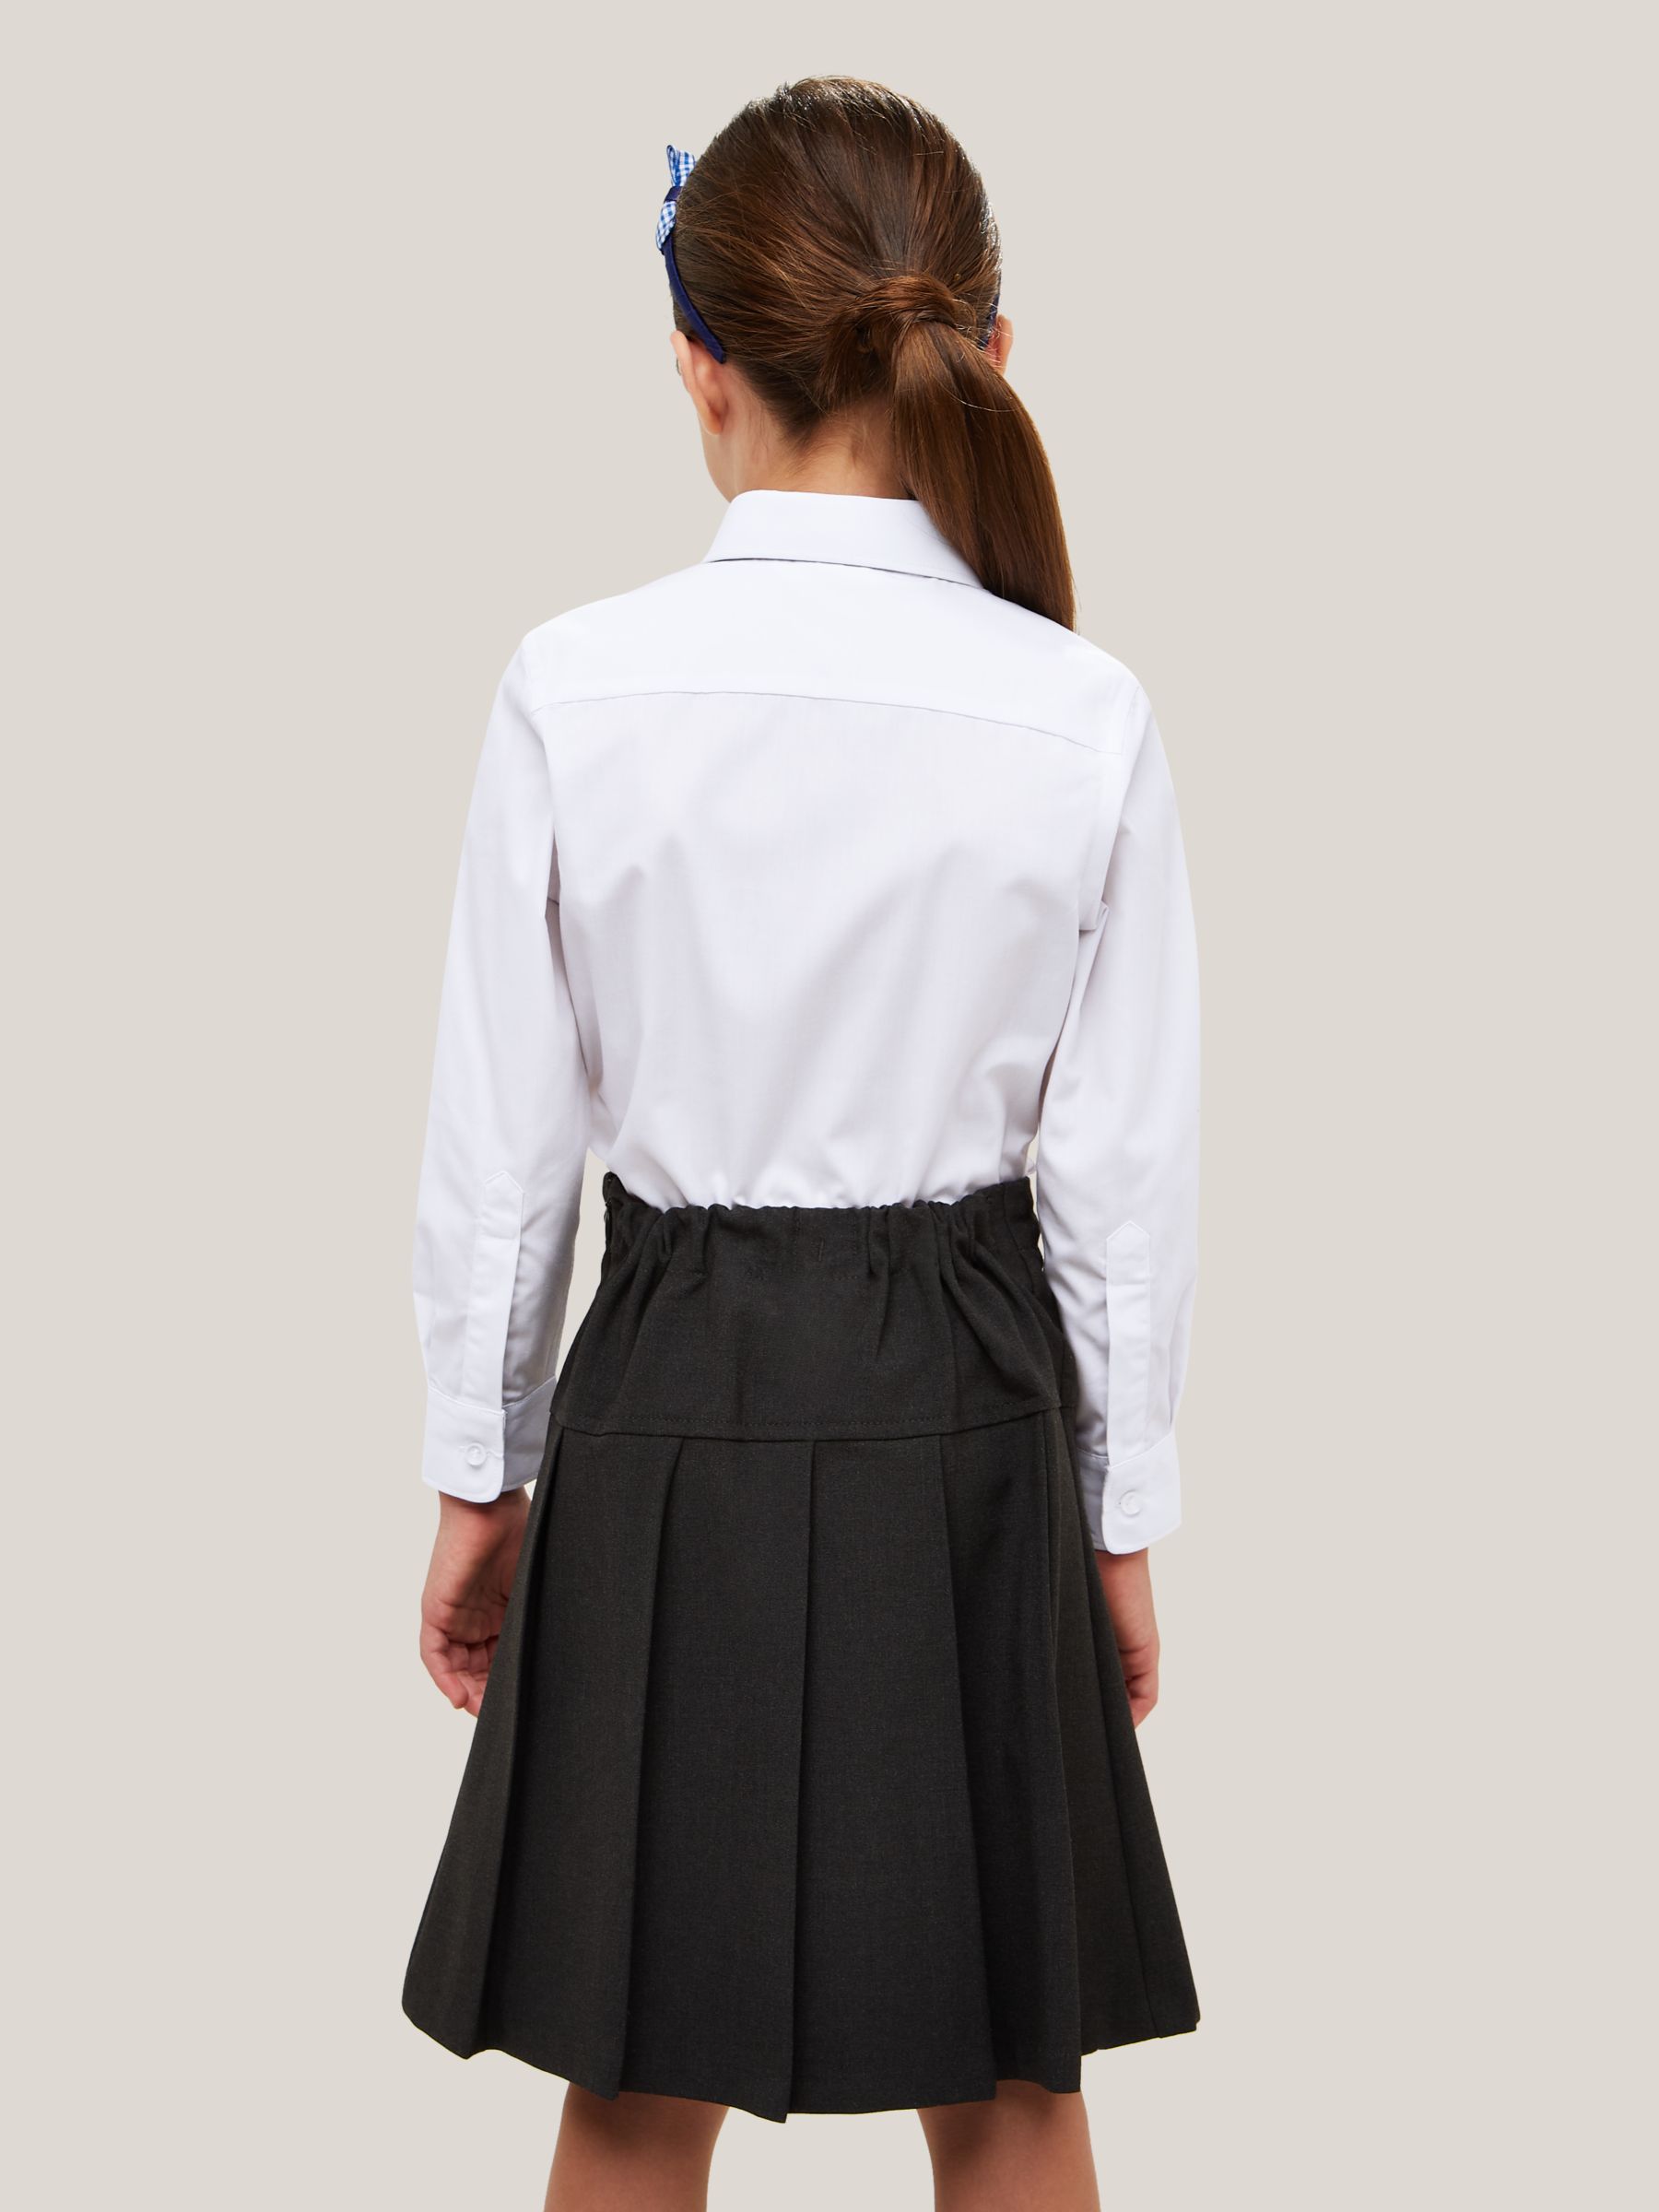 Buy John Lewis Girls' Long Sleeved Blouse, White Online at johnlewis.com